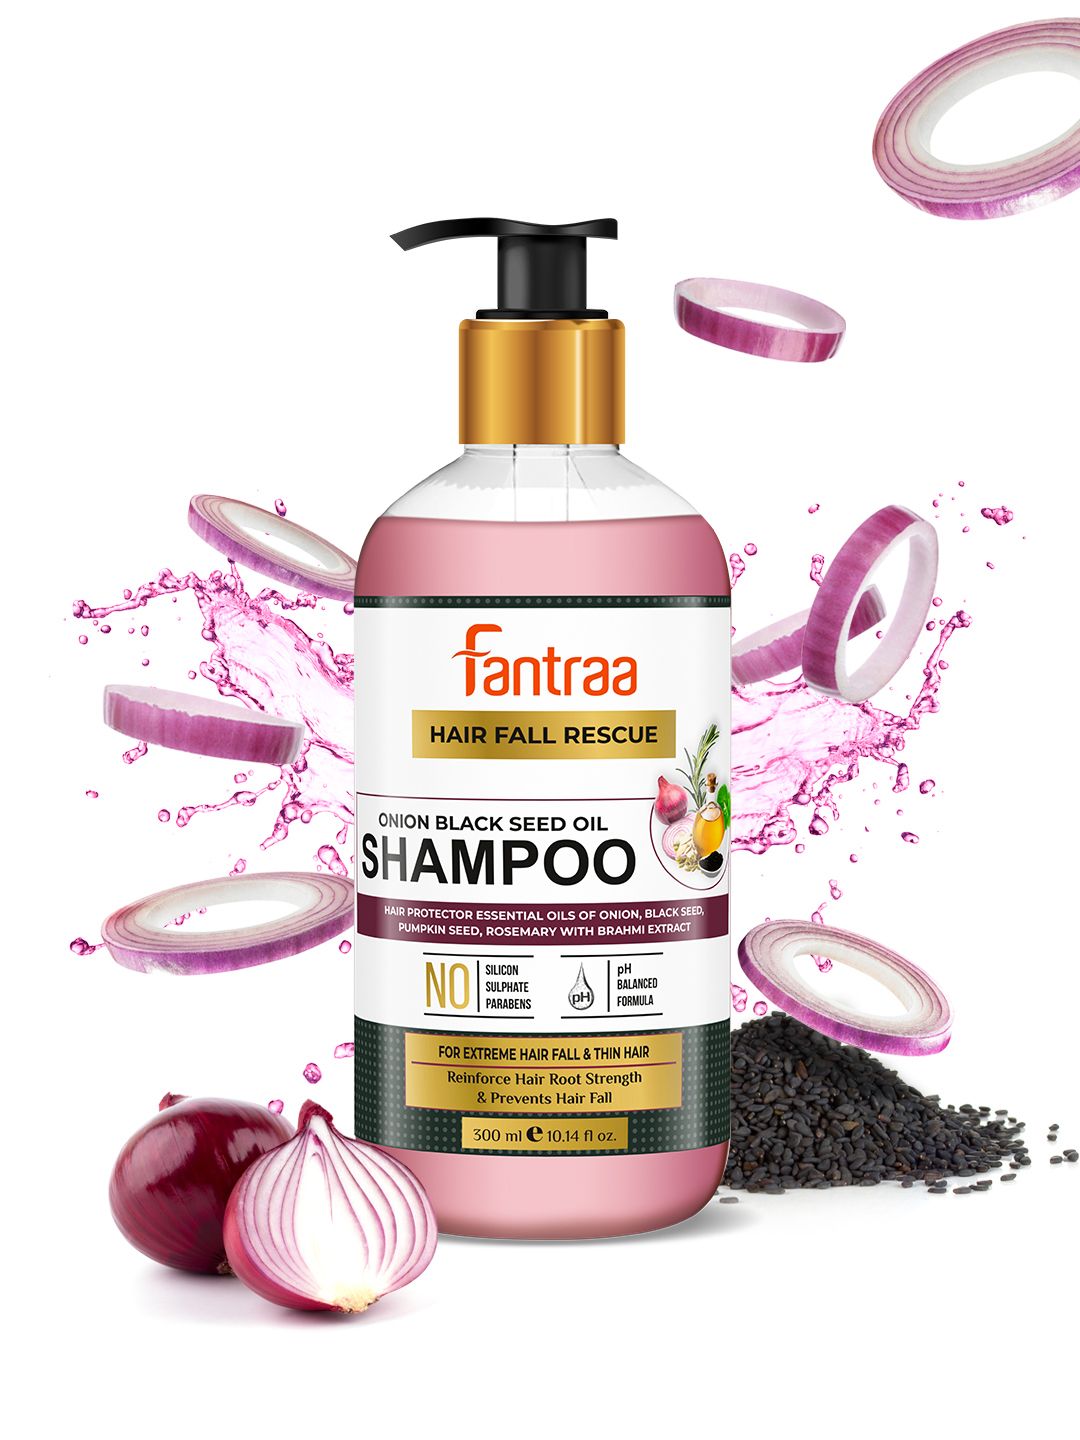 Fantraa Unisex Onion Black Seed Oil Shampoo 300 ml Price in India